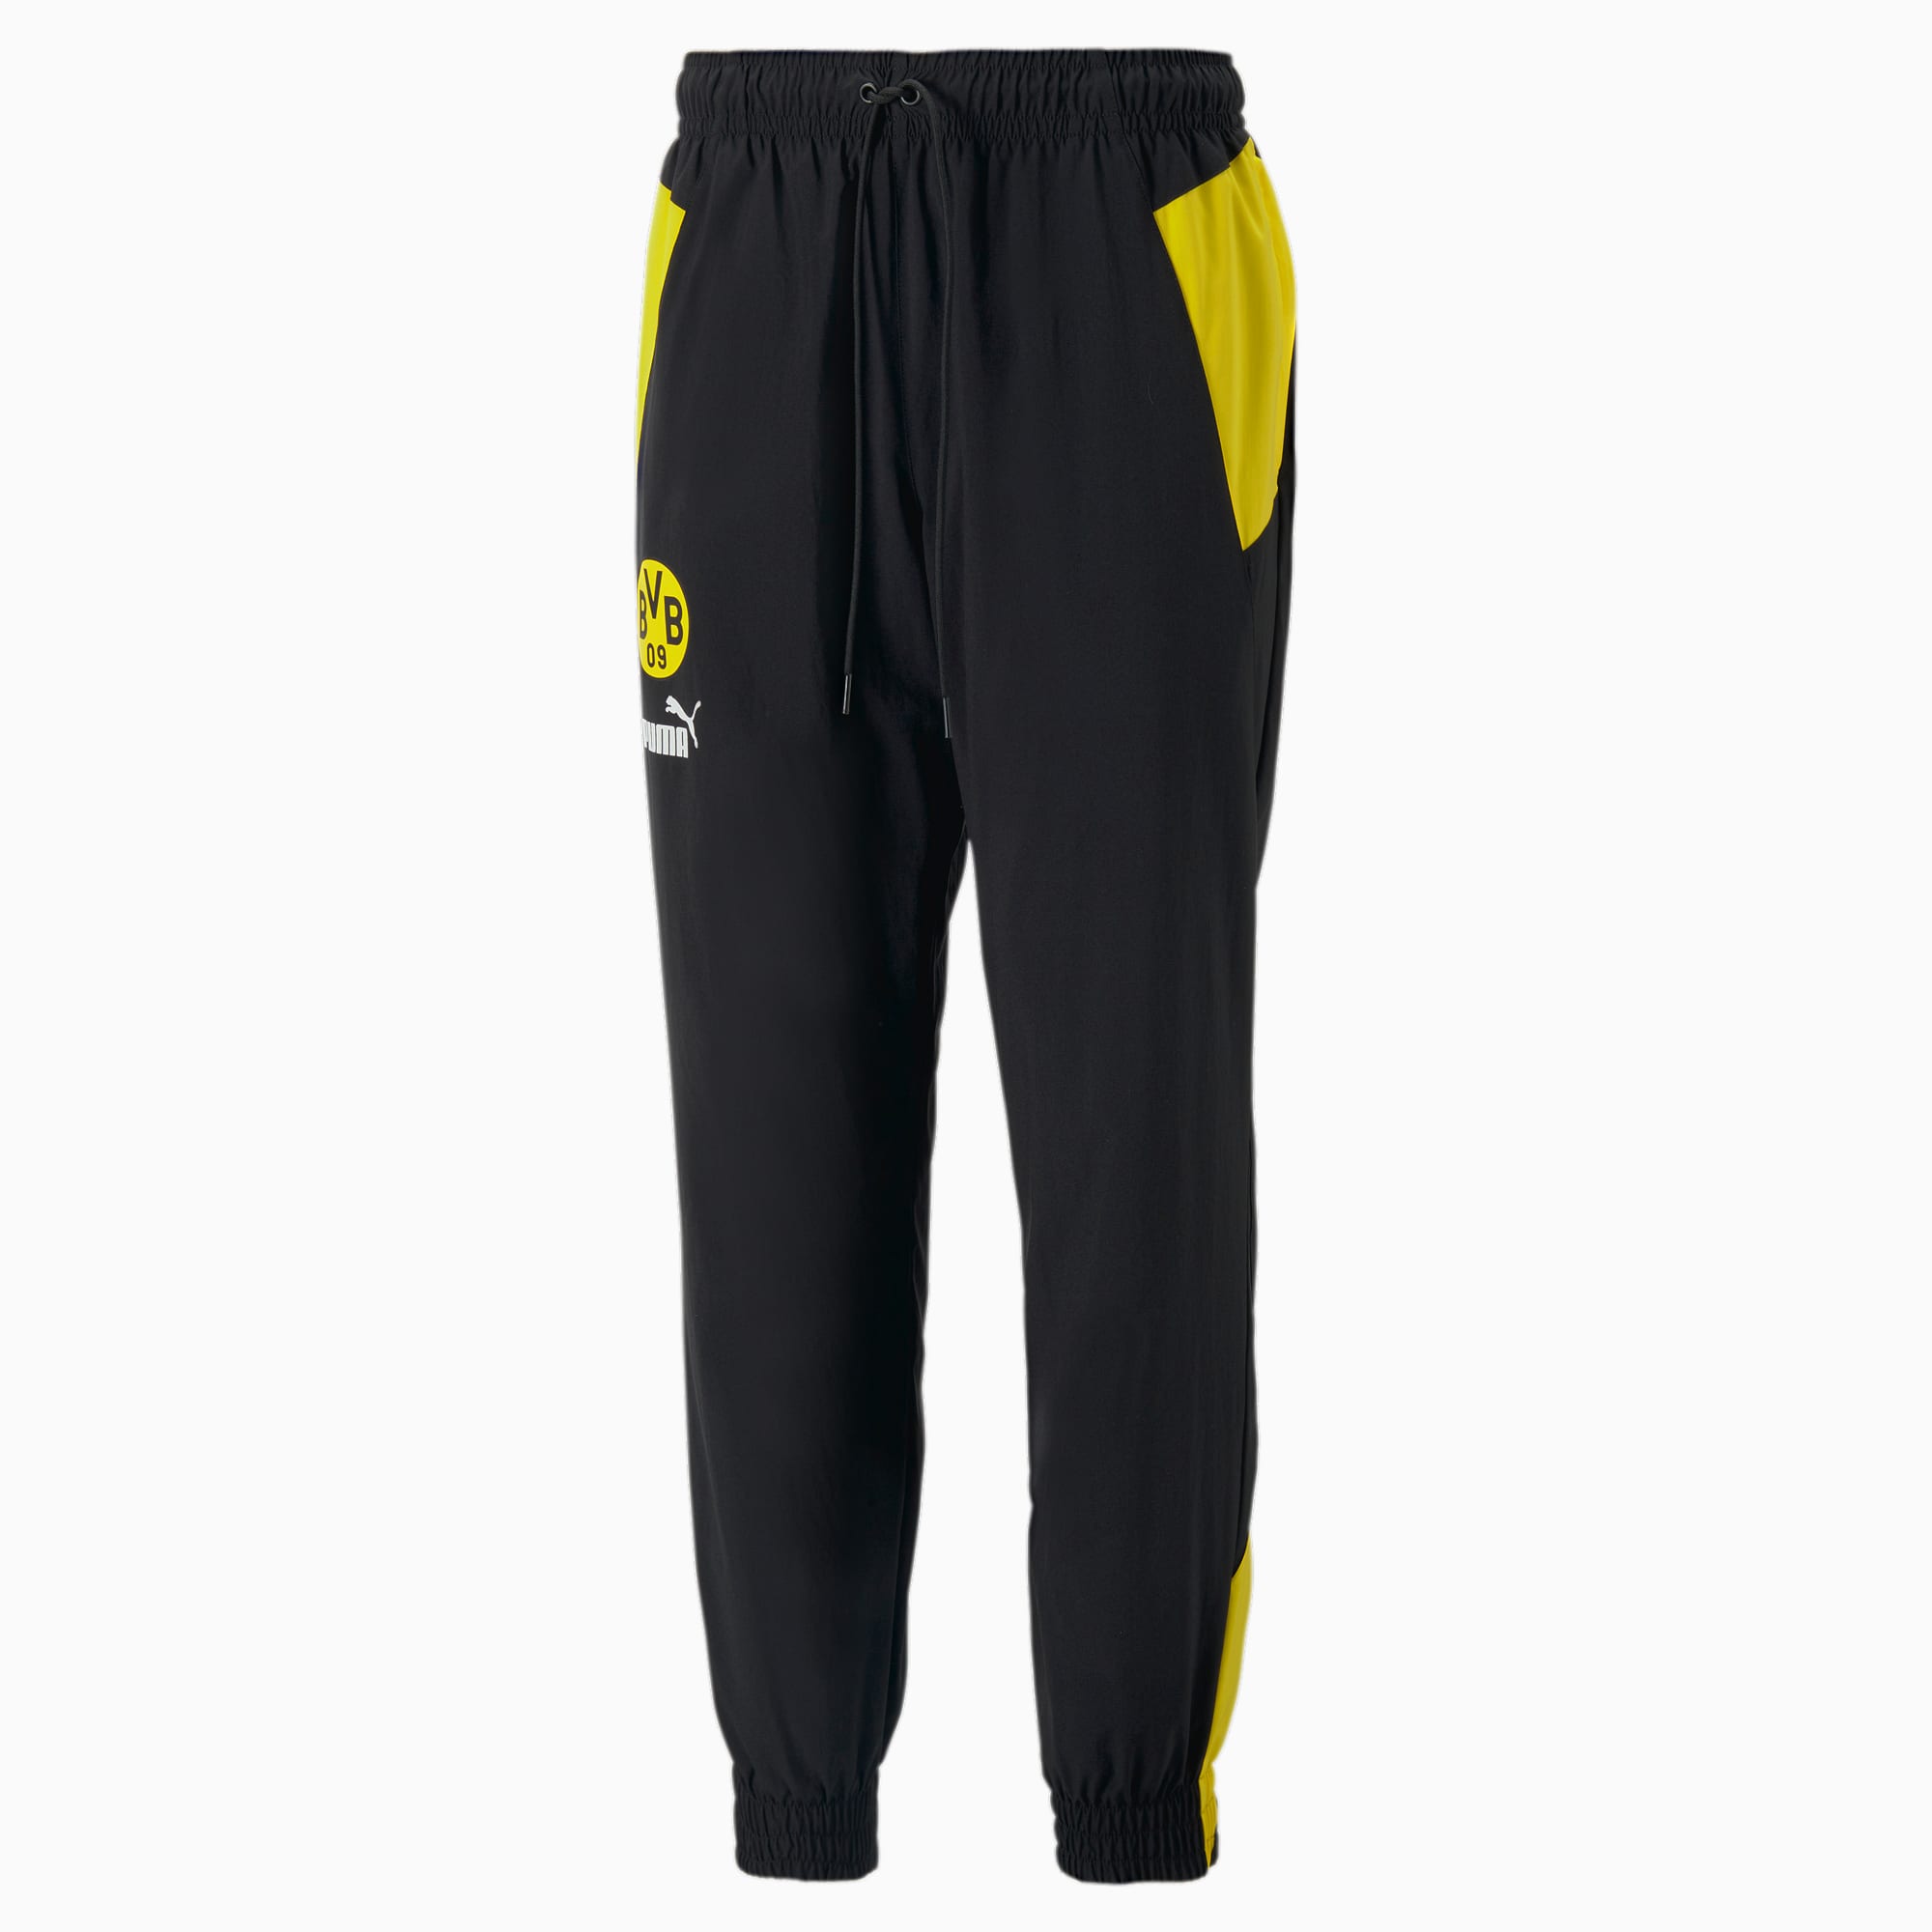 PUMA Borussia Dortmund Woven Pants Men, Black/Cyber Yellow